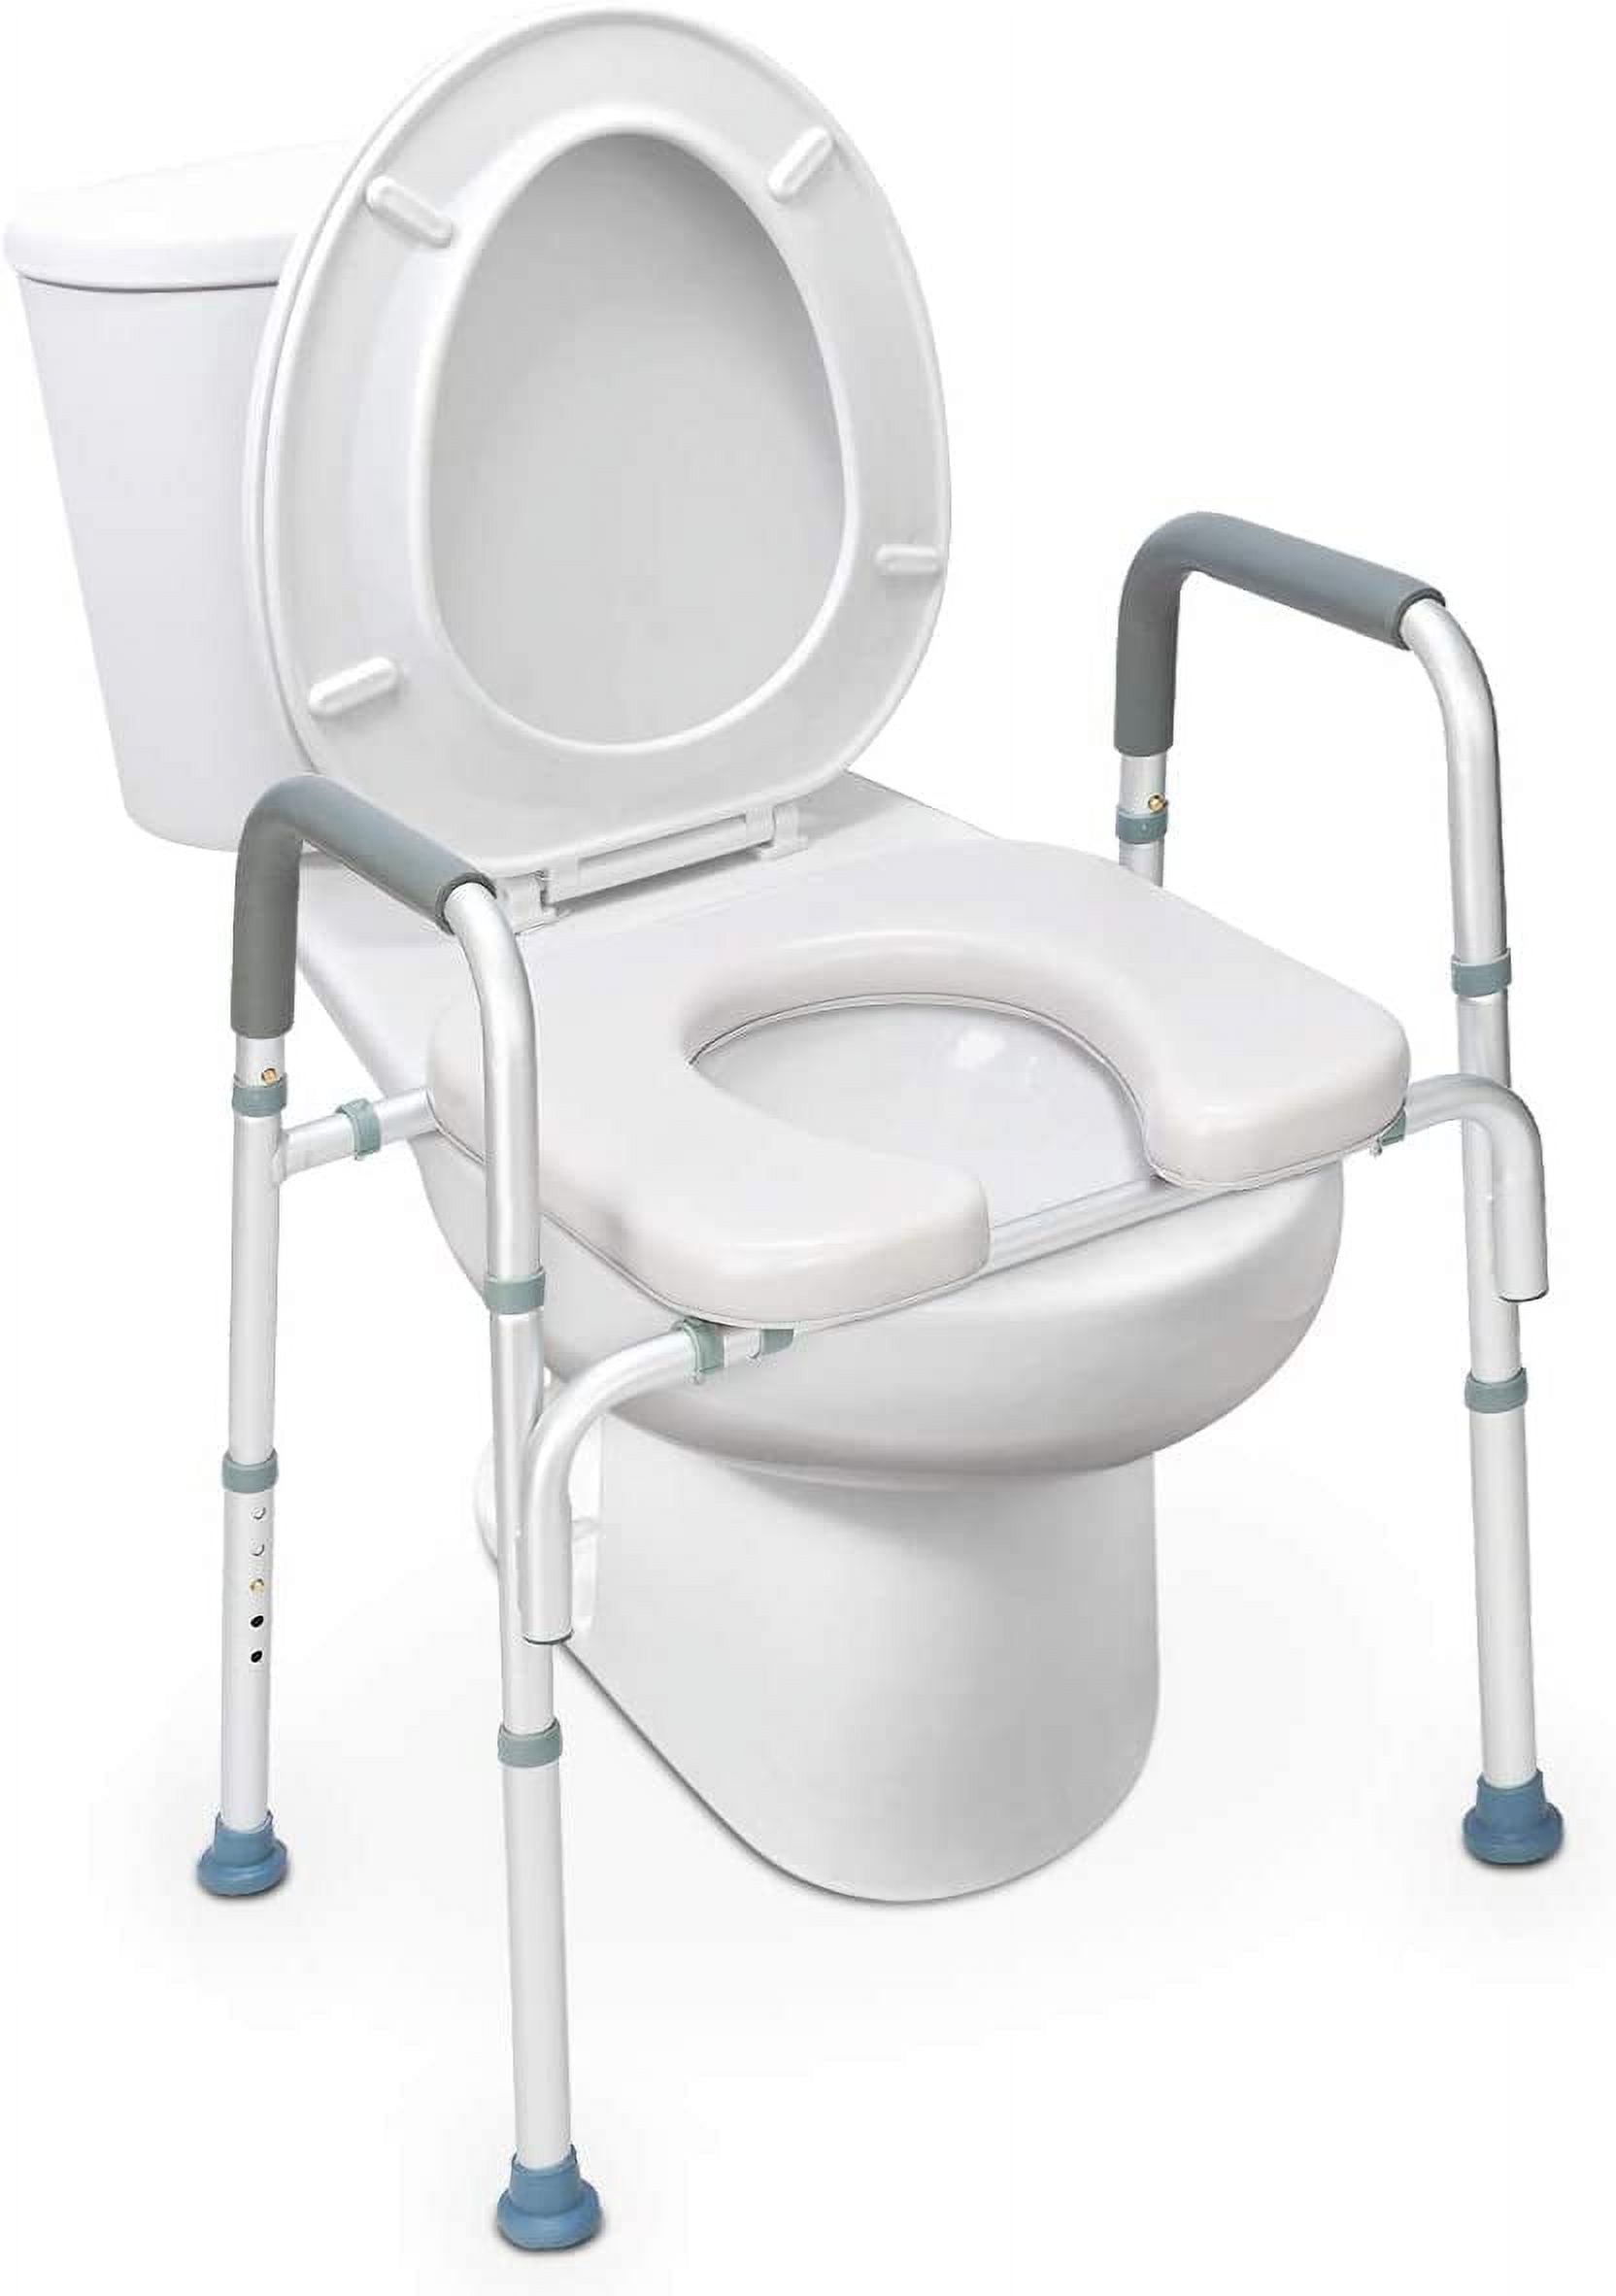 TILT Handicap Toilet Seat Lift for Independent Living